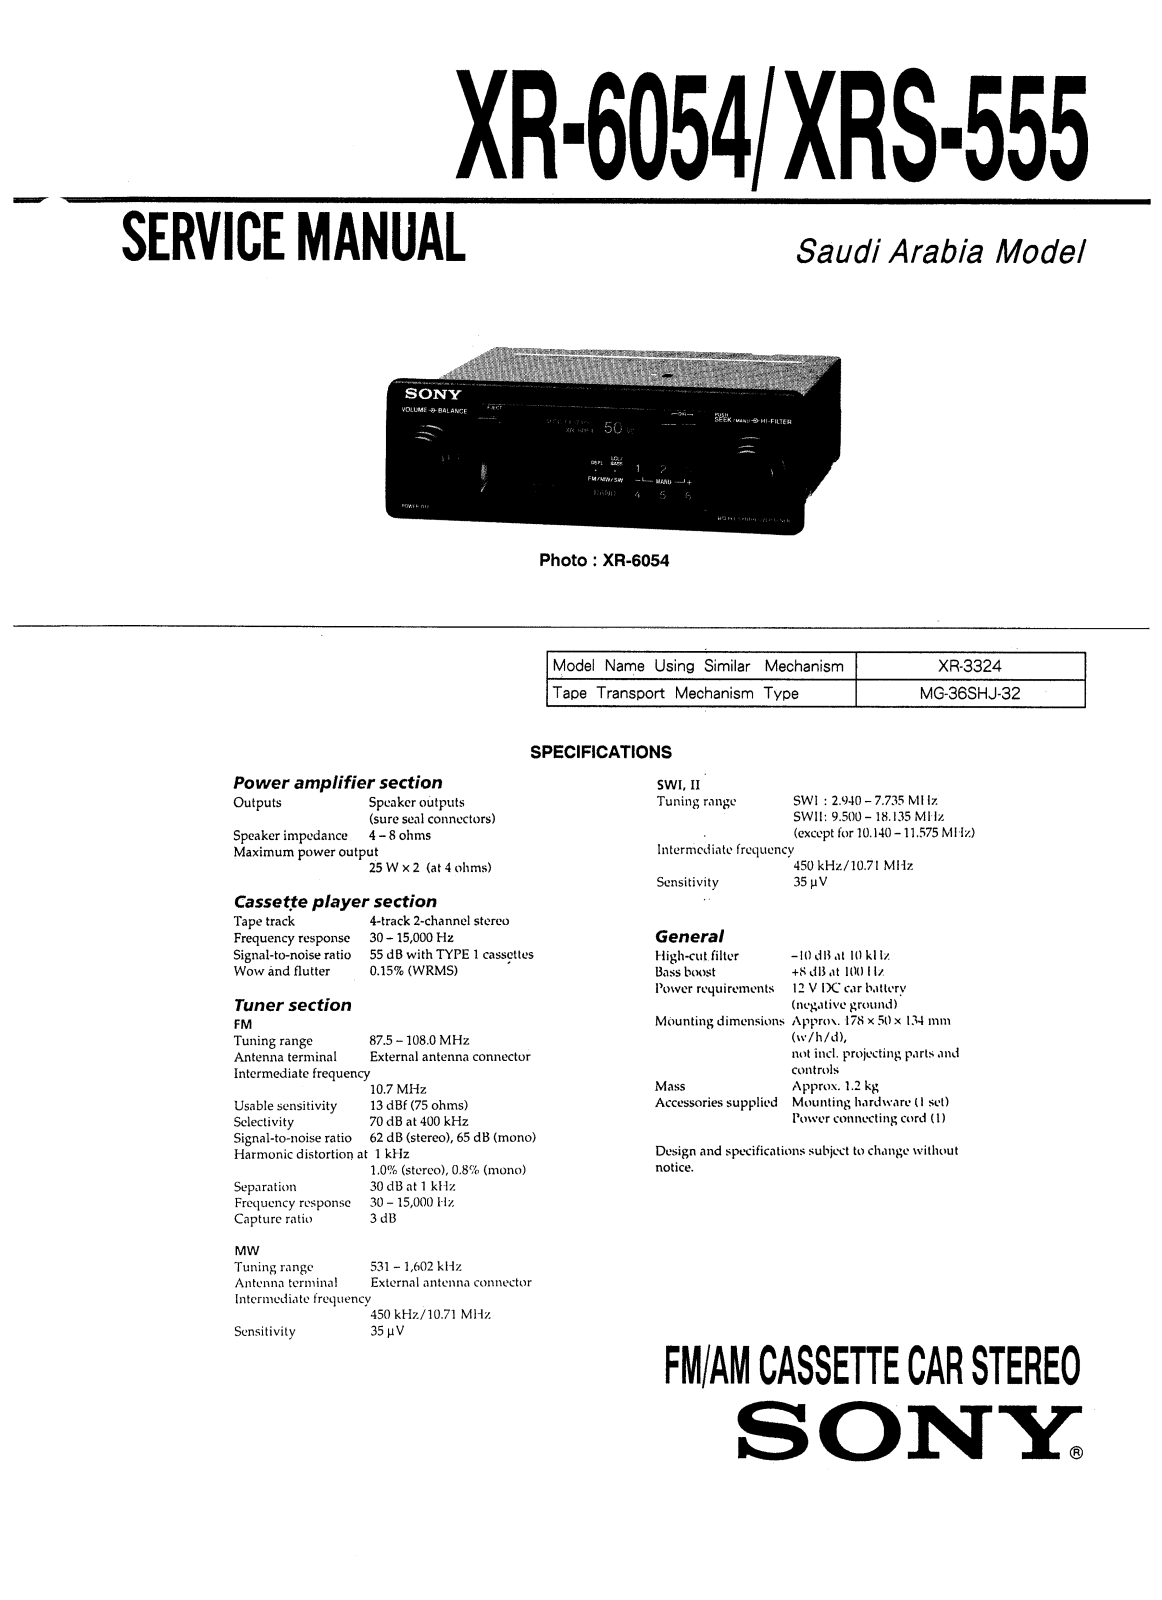 Sony XR-6054, XR-XRS-555 Service Manual